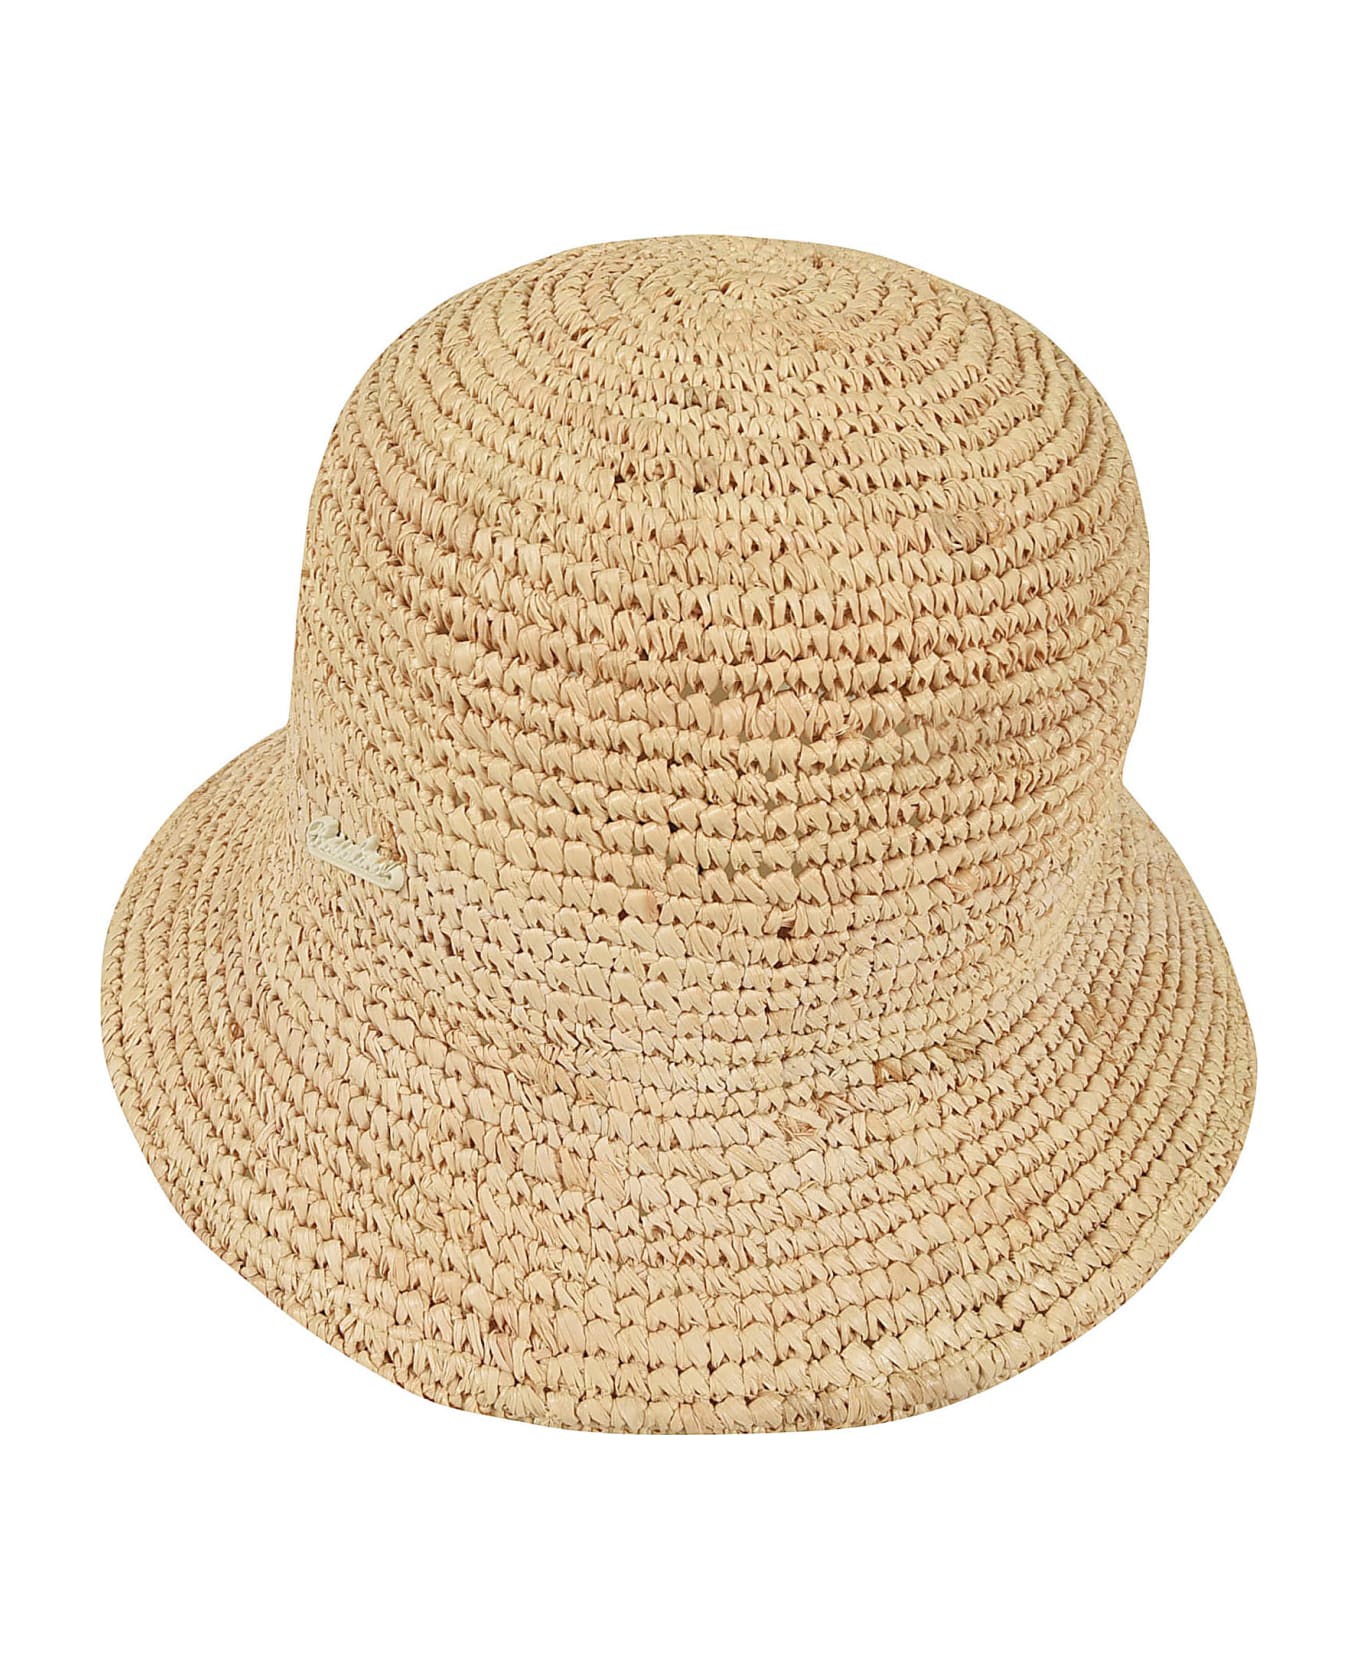 Borsalino Rafia Crochet Bucket Hat - Beige